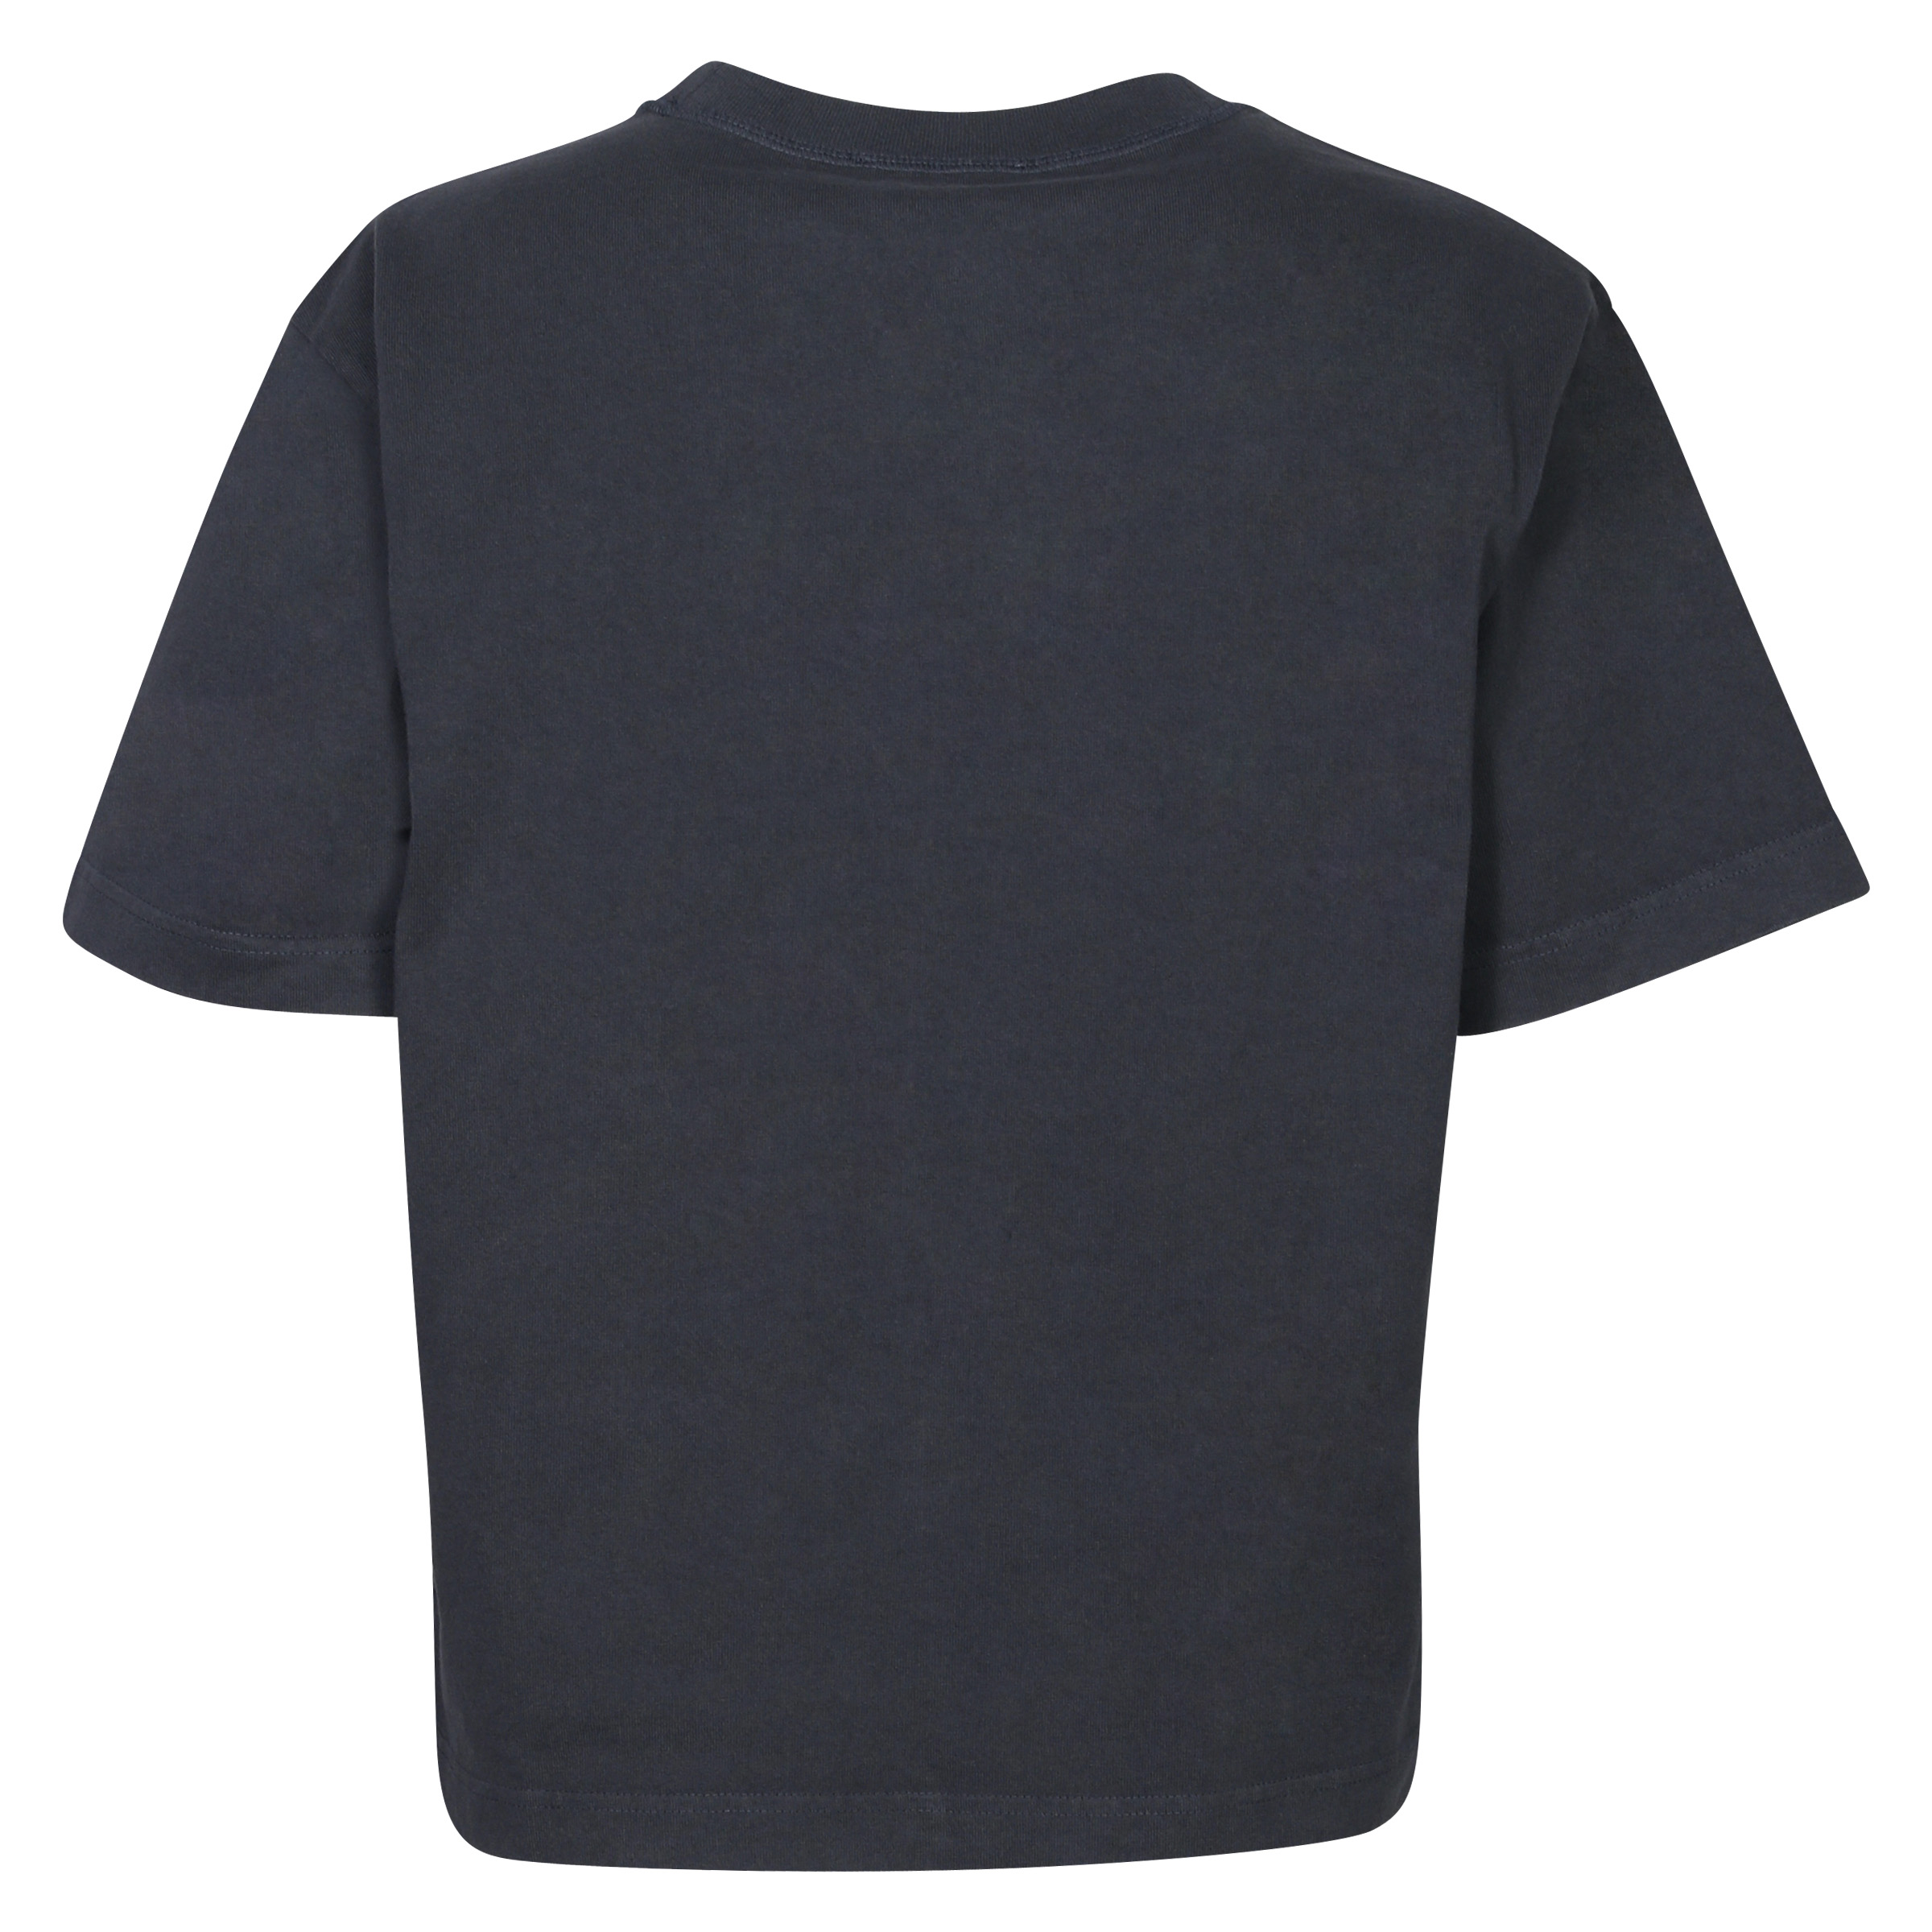 Acne Studios T-Shirt Black S